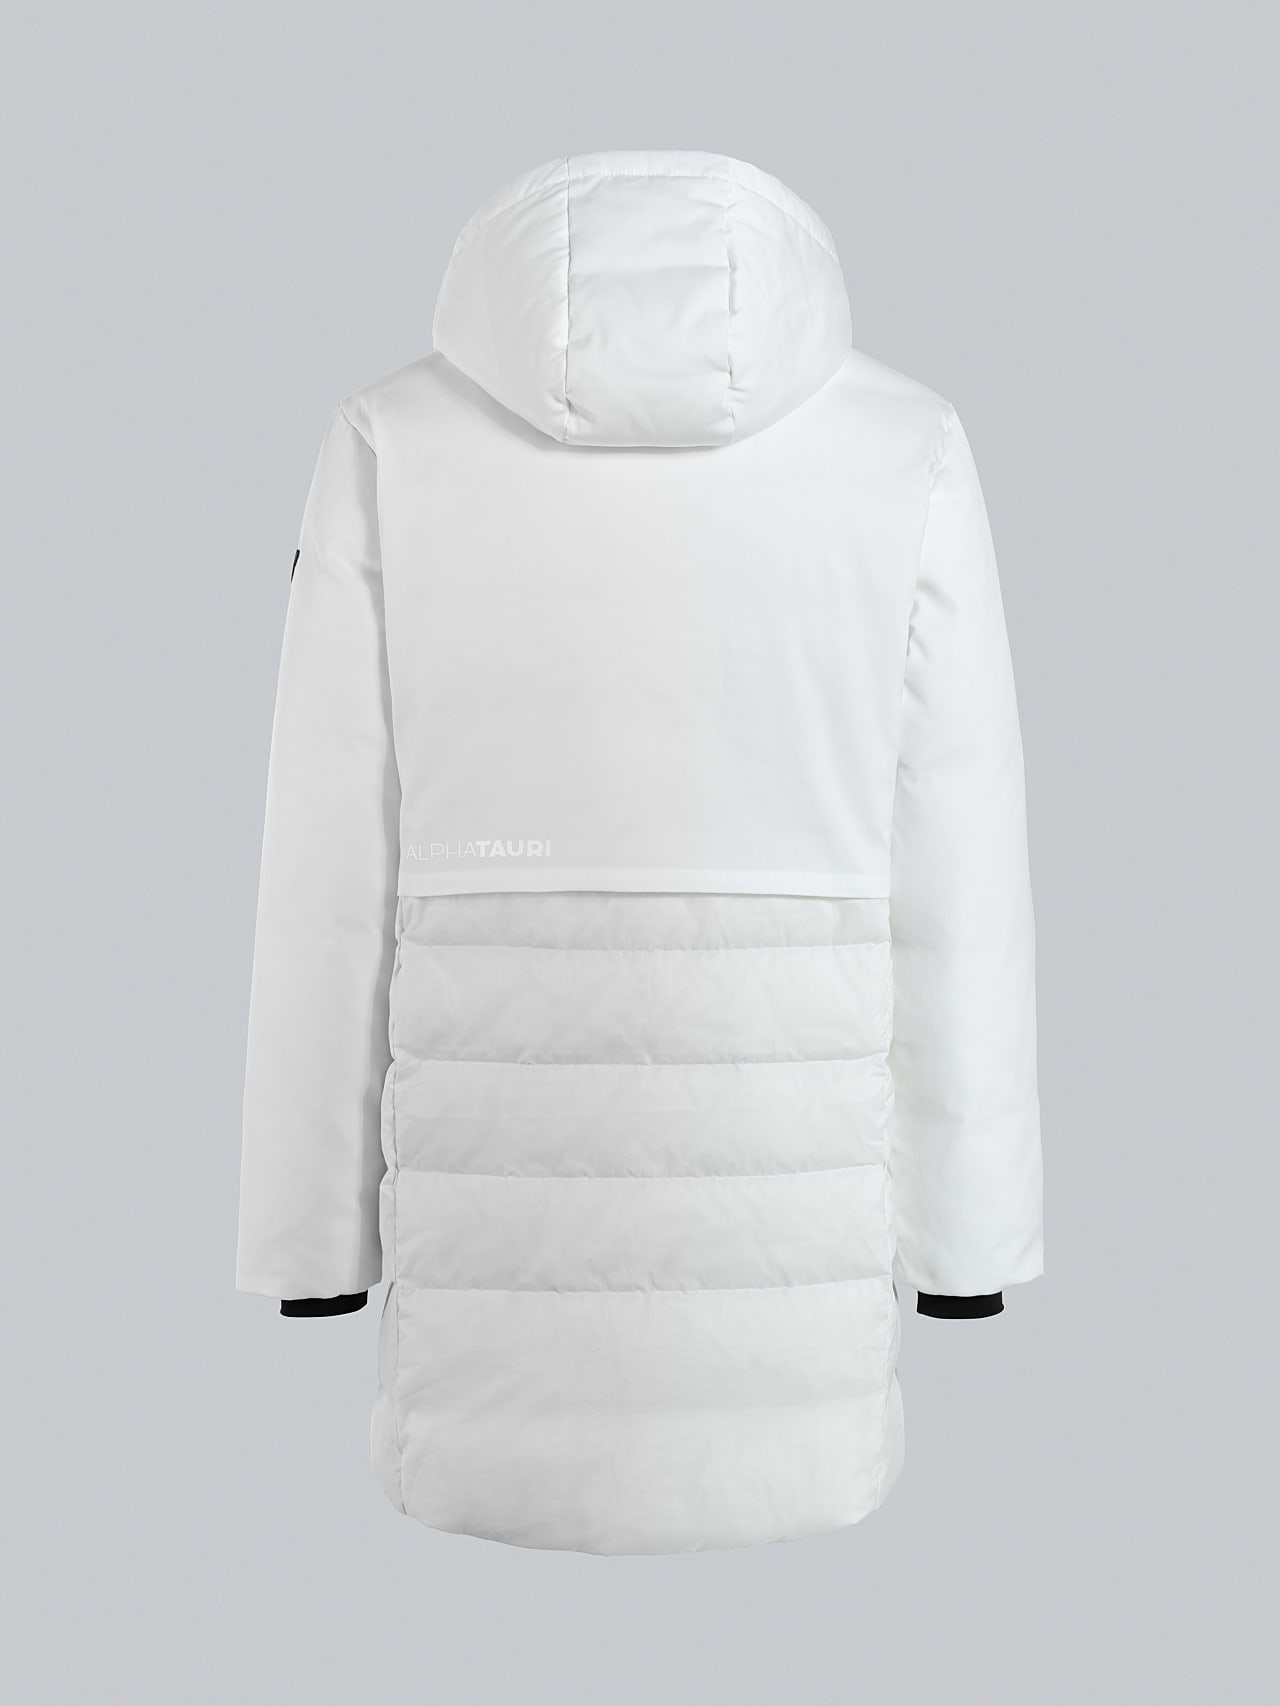 AlphaTauri | ODORU V1.Y5.02 | Padded Winter Jacket in offwhite for Men